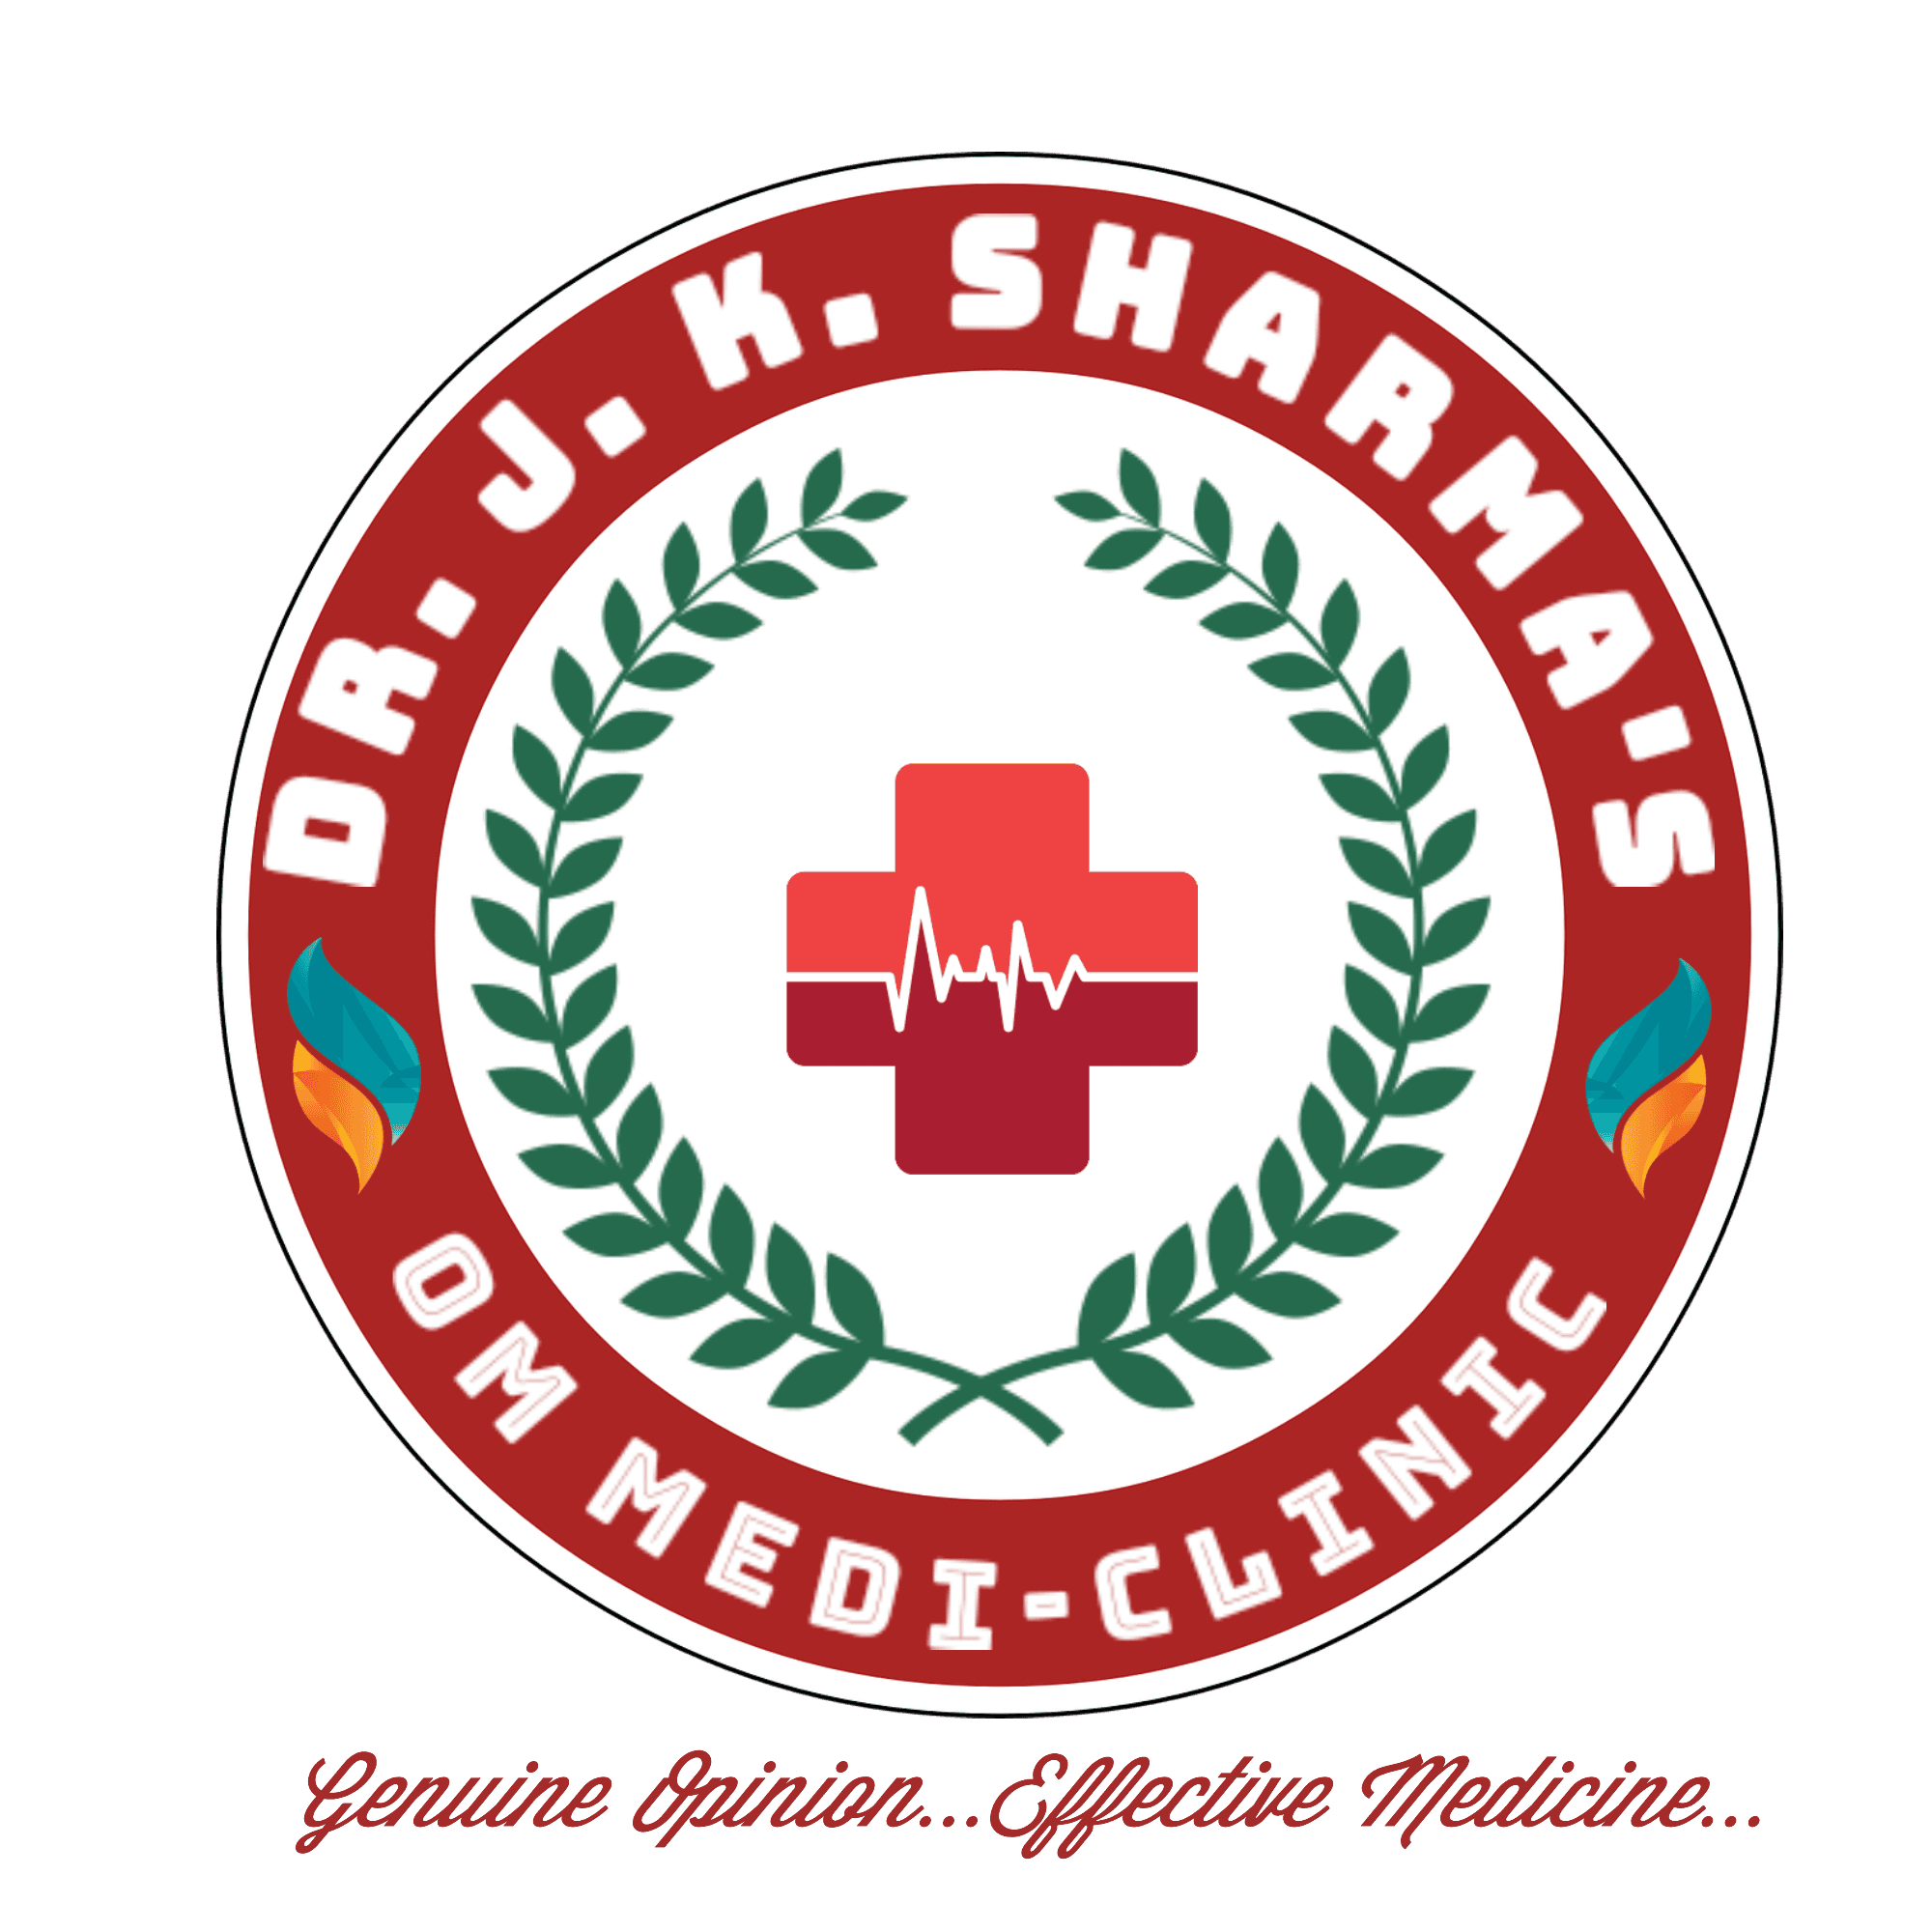 Dr J K Sharma om Medi Clinic 